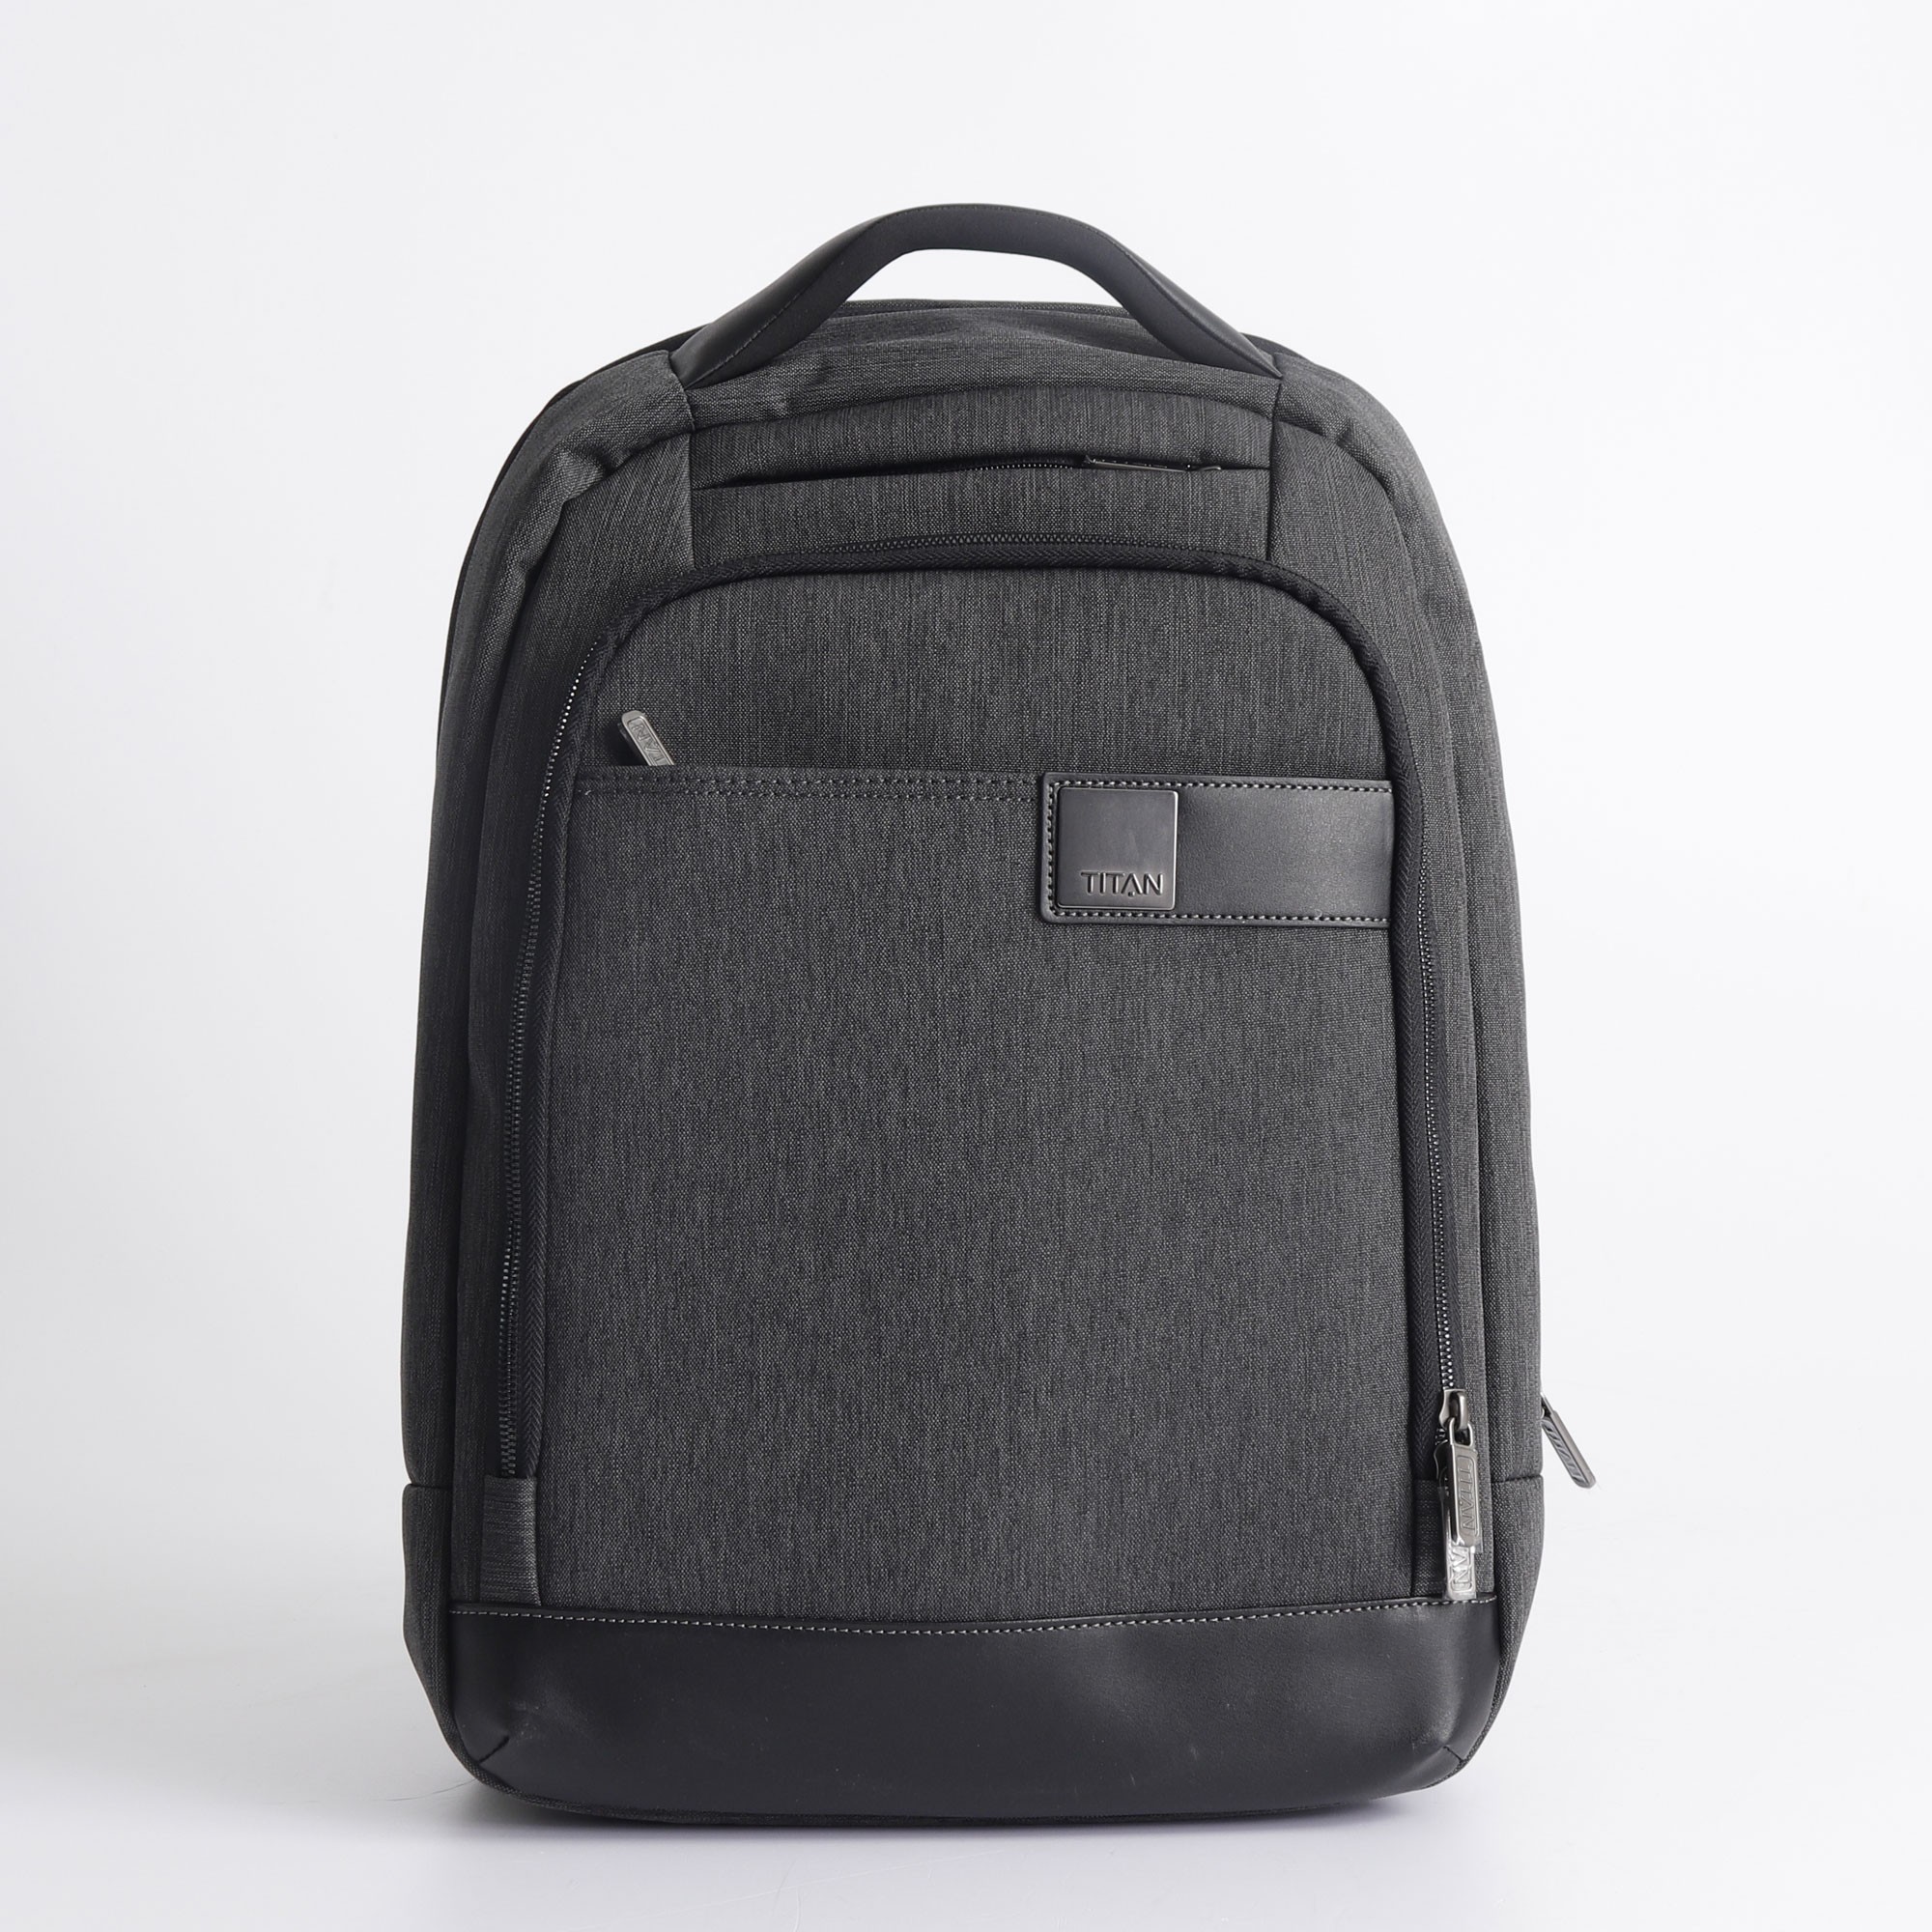 Titan Power Pack Rucksack mit Laptopfach Business Daypack Backpack 379501 